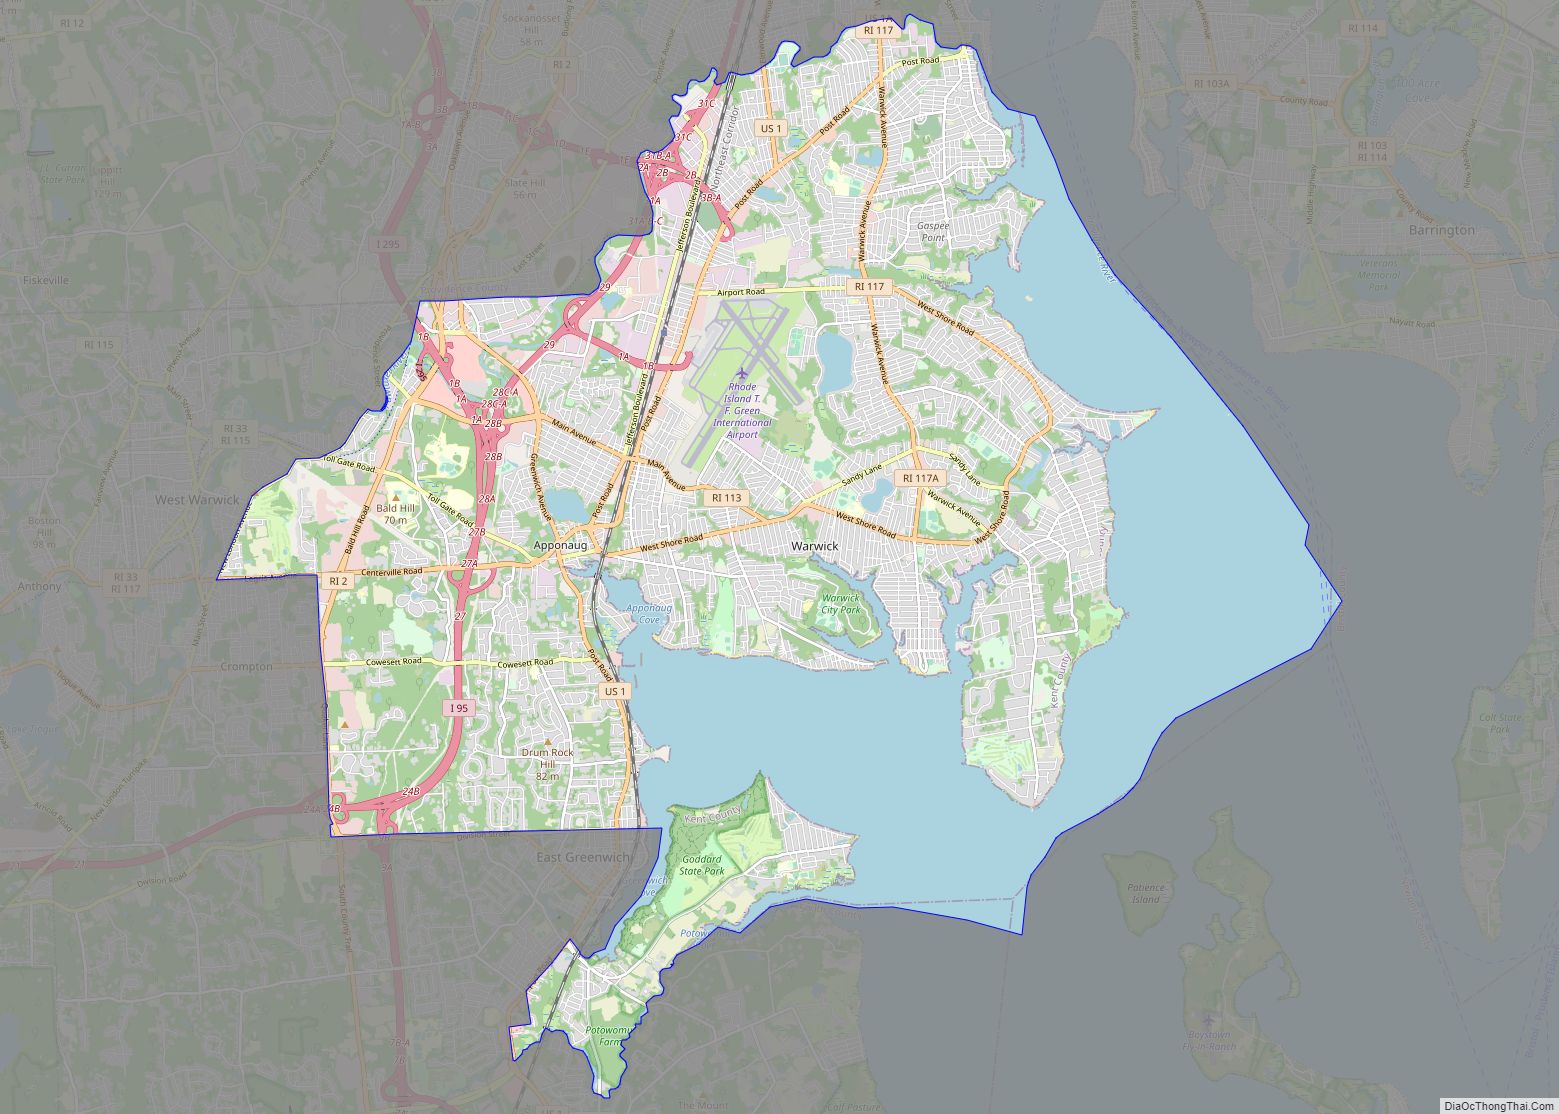 Map of Warwick city, Rhode Island